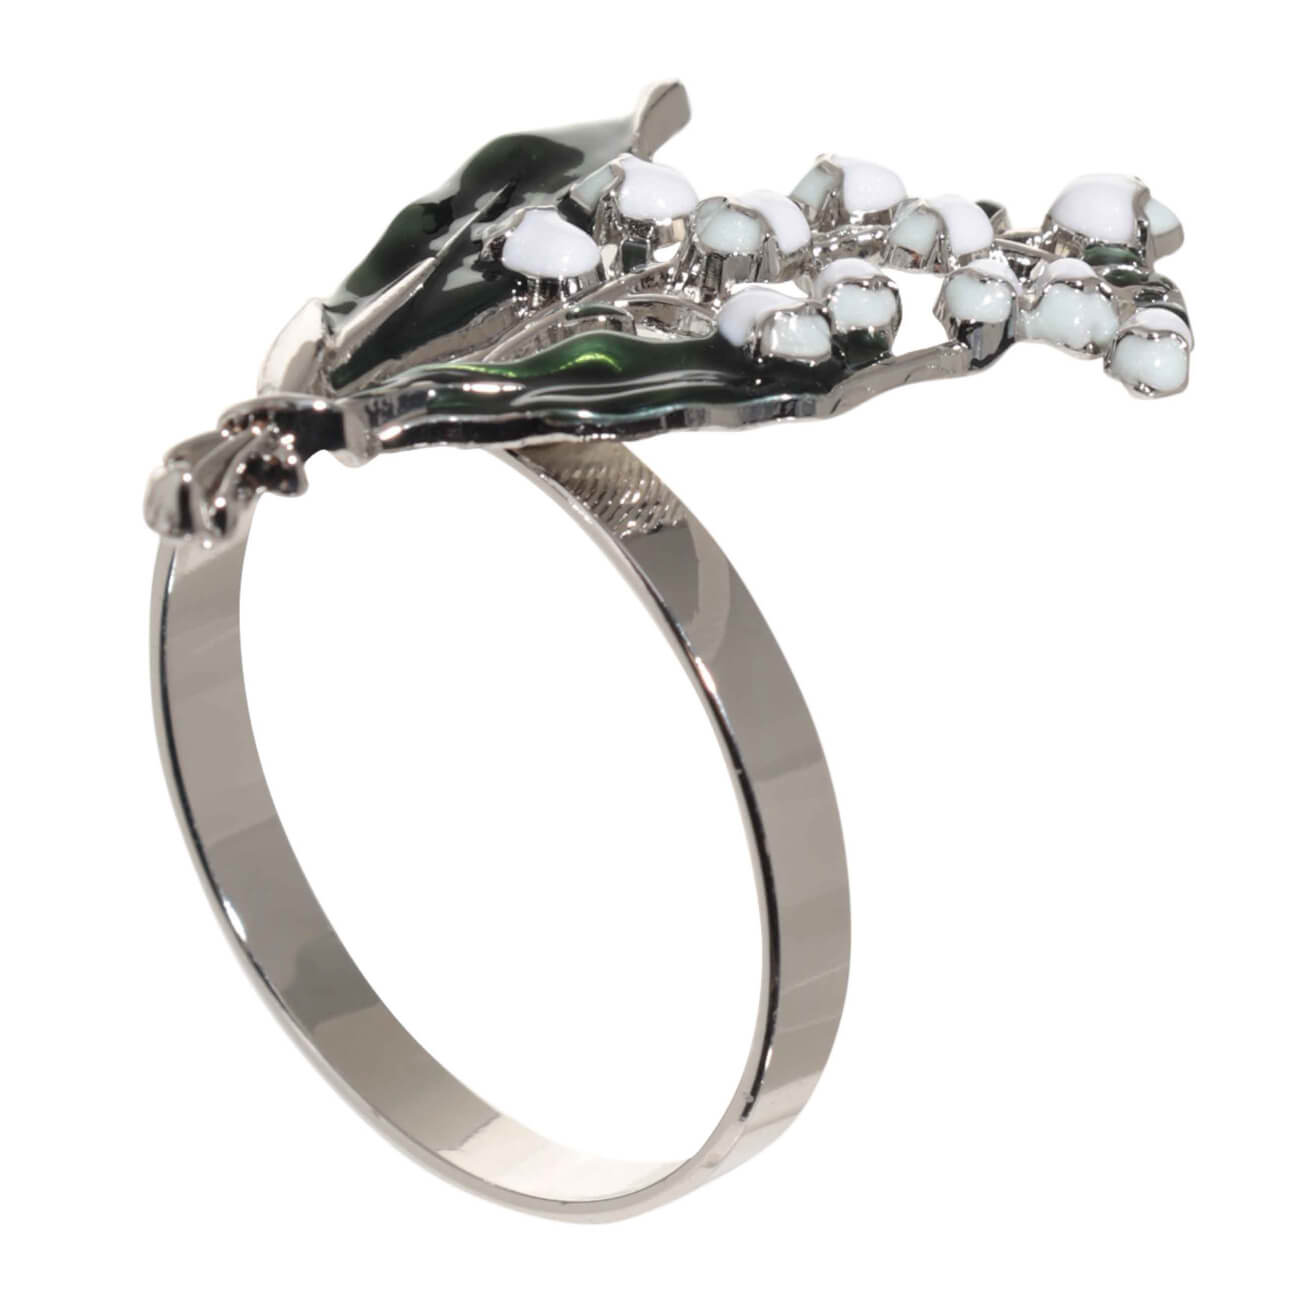 Кольцо для салфеток, 5 см, металл, зелено-серебристое, Ландыш с листьями, May-lily кольцо для карниза d 28 33 мм 10 шт серебряный